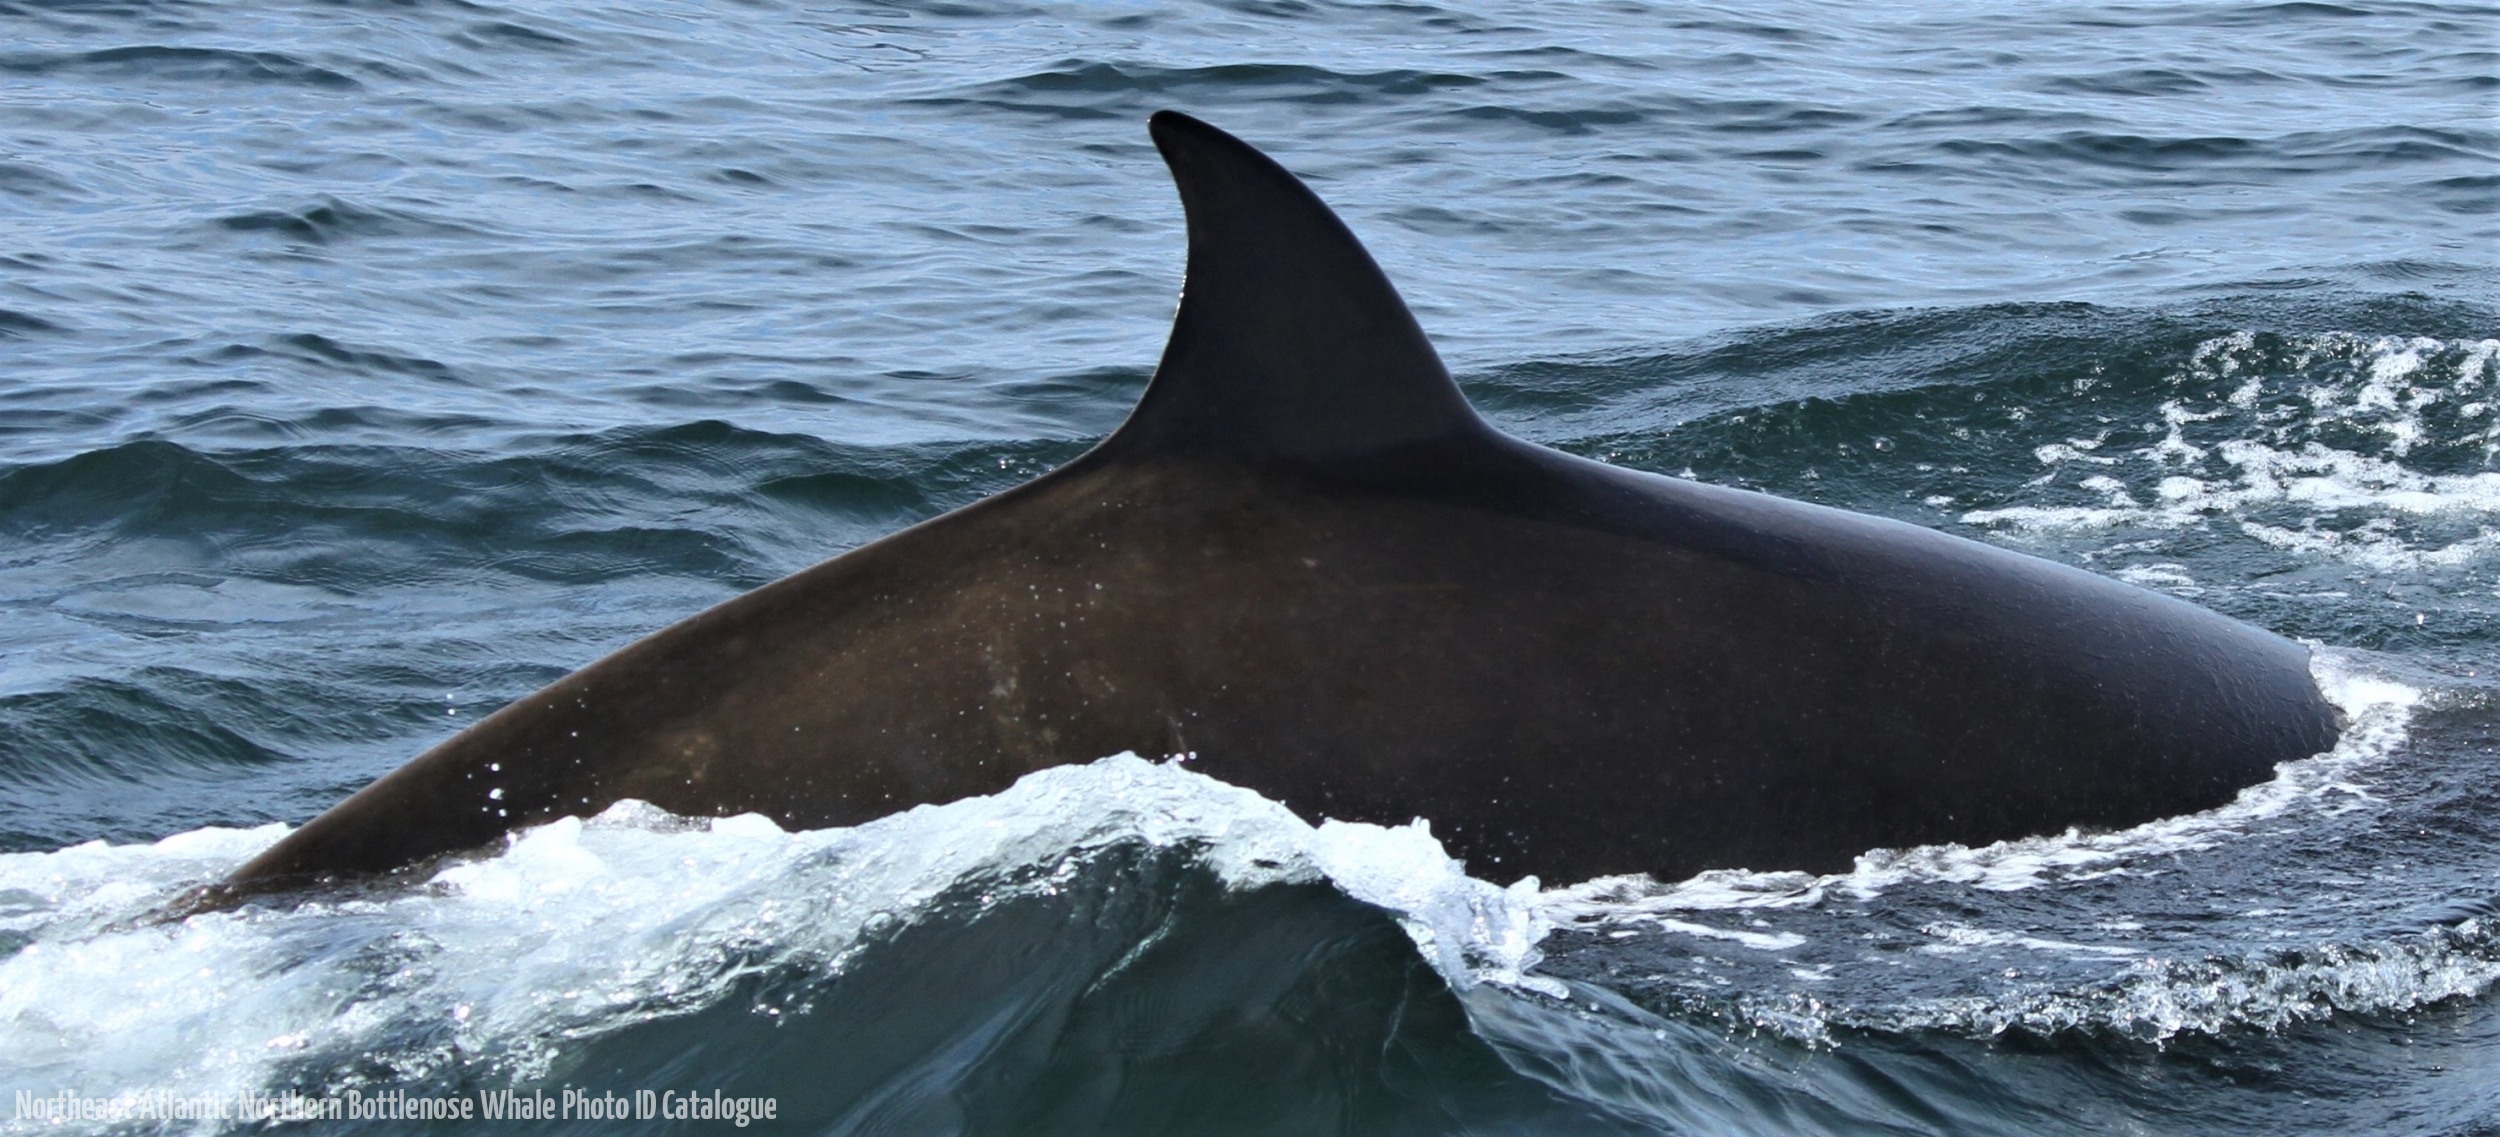 Whale ID: 0265,  Date taken: 24-06-2013,  Photographer: Paul H. Ensor